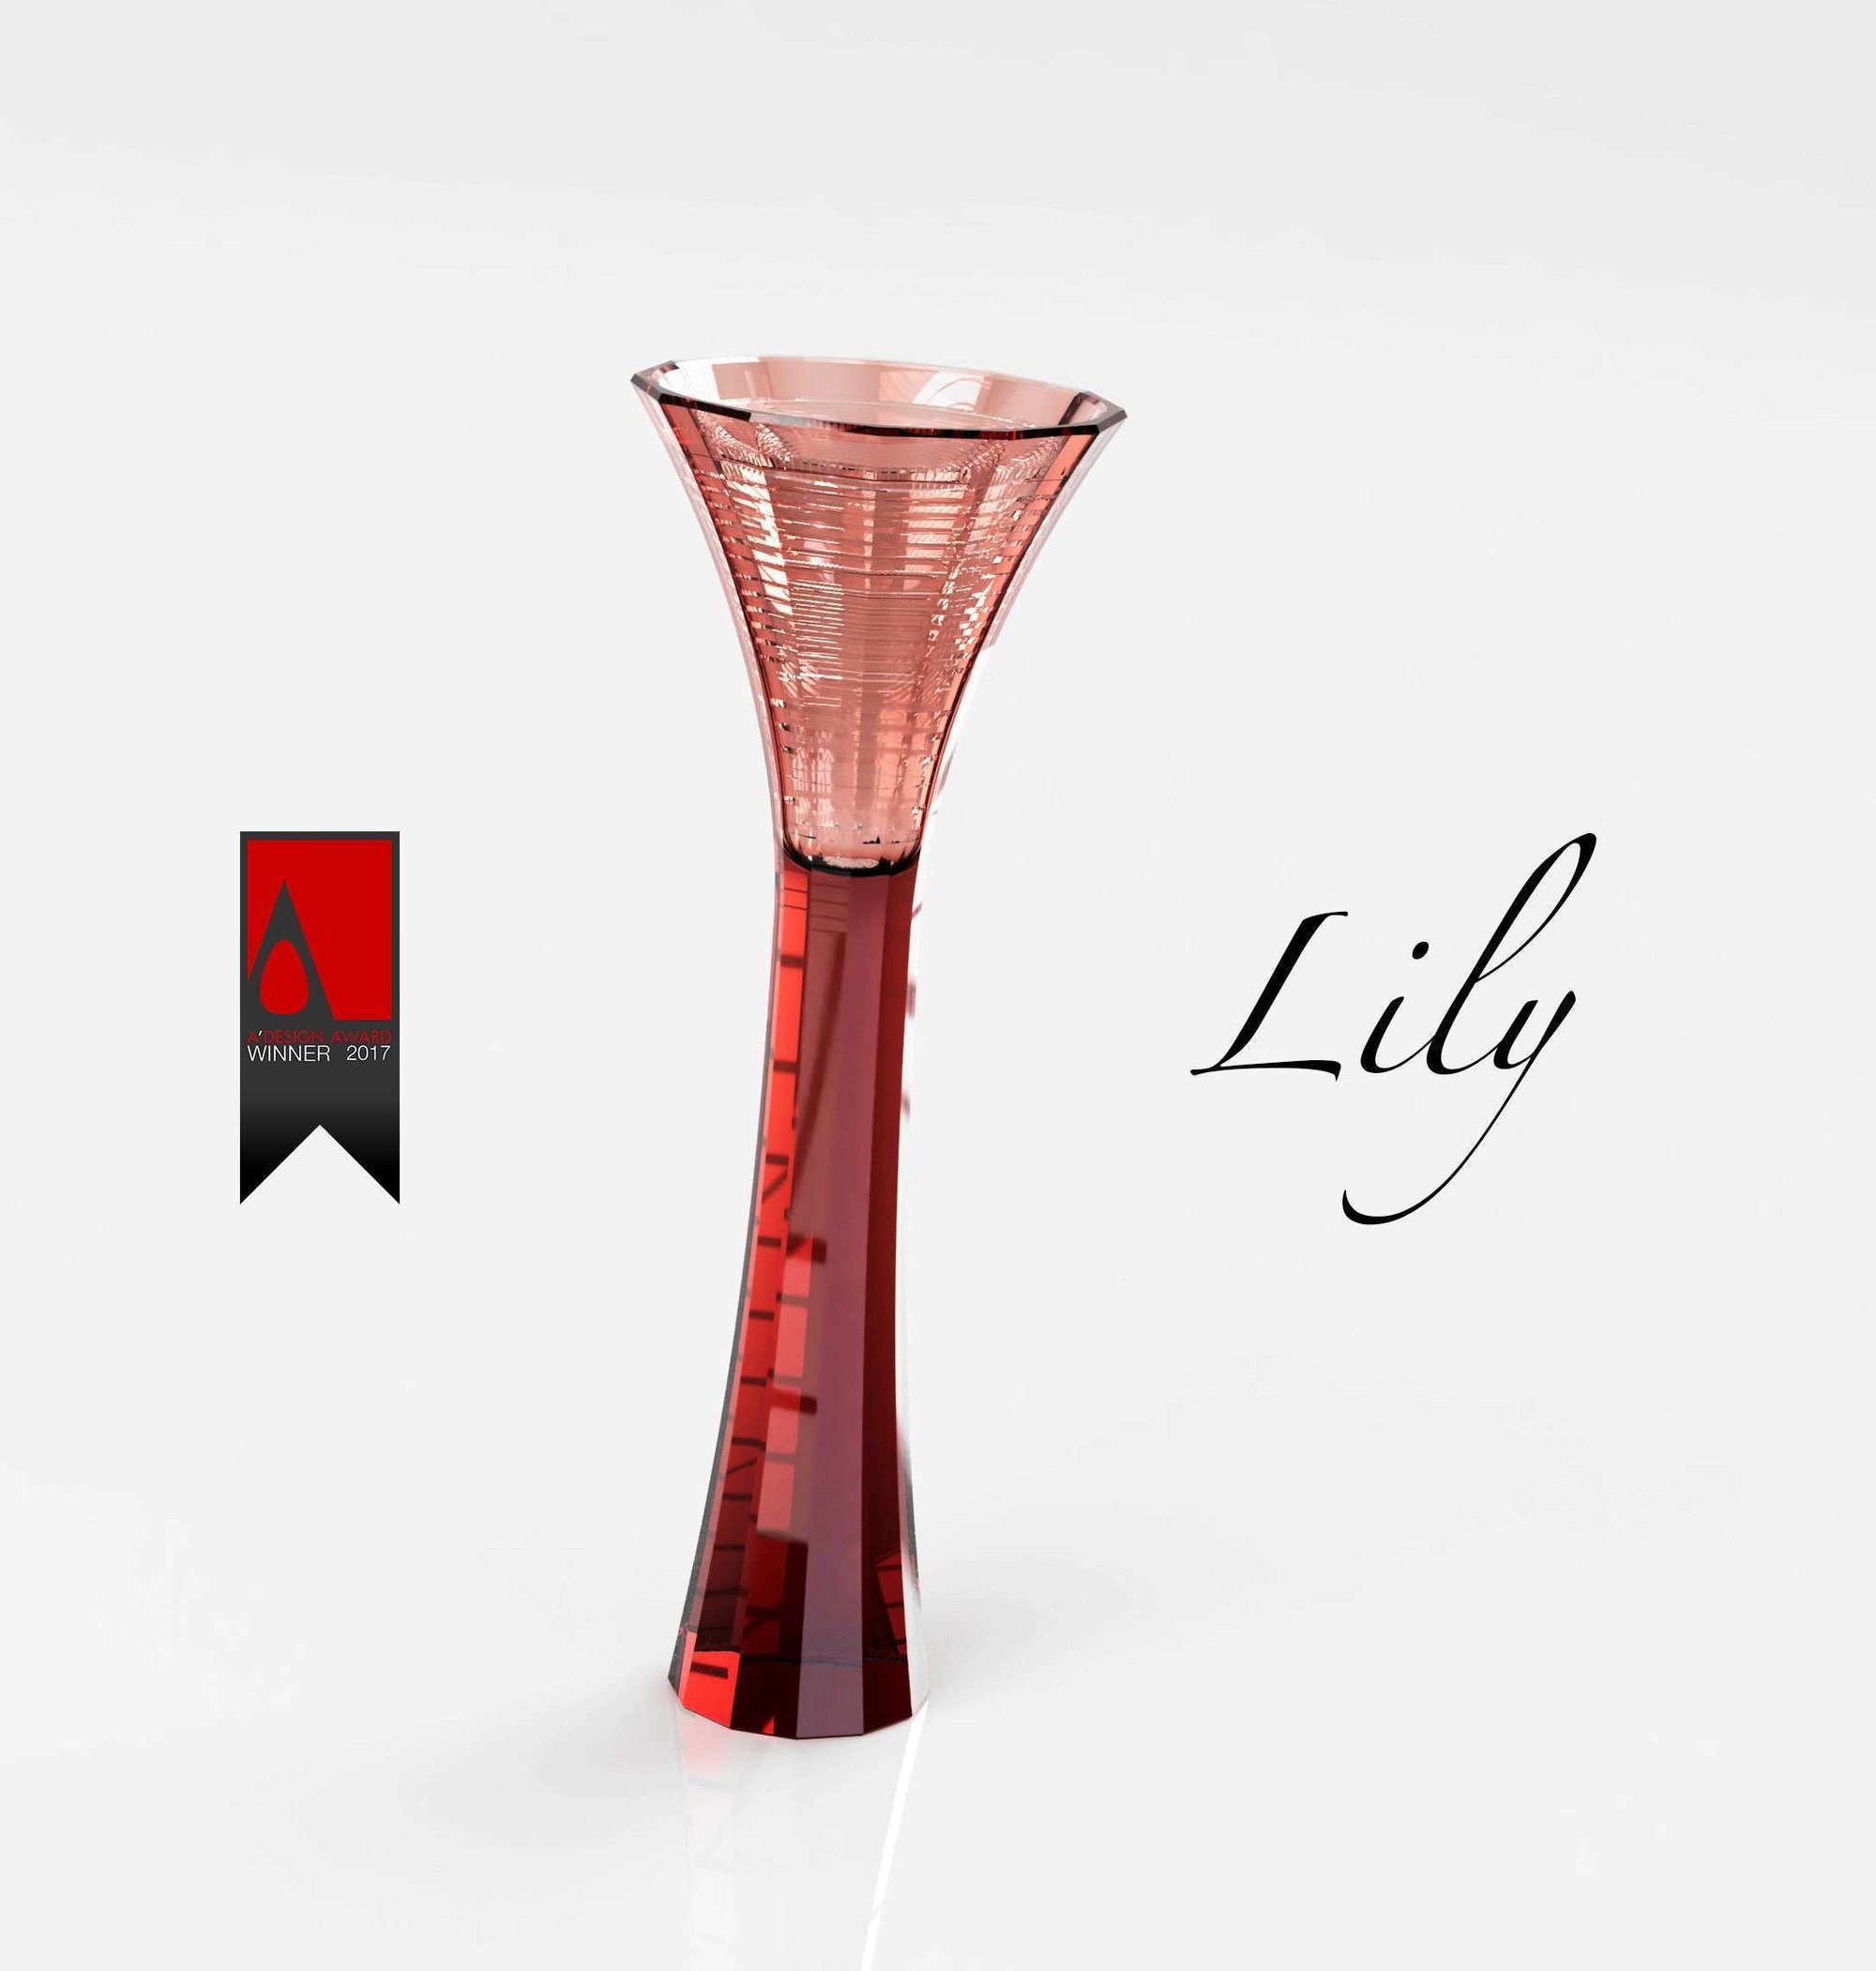 lily shot glass miroslavo awarded